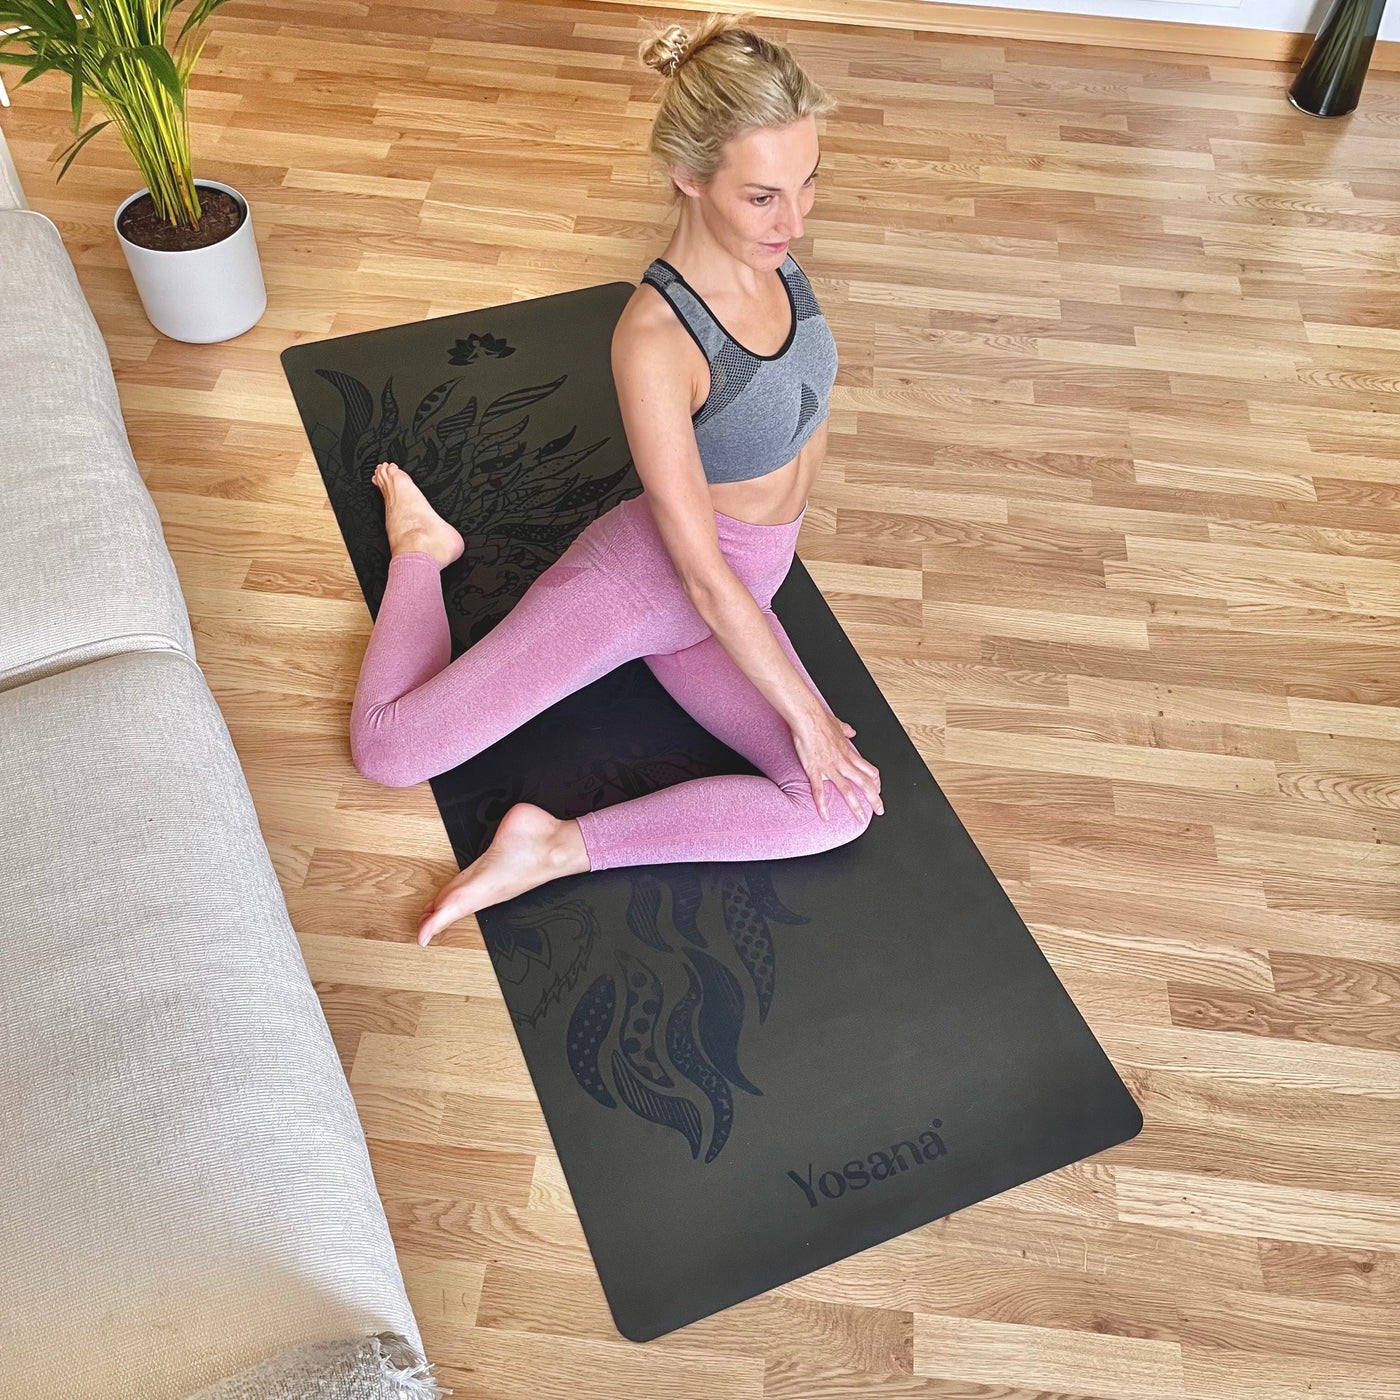 Yoga Aktionsset 4-teilig, Studioline Ultragrip "Löwe Schwarz" - YOSANA